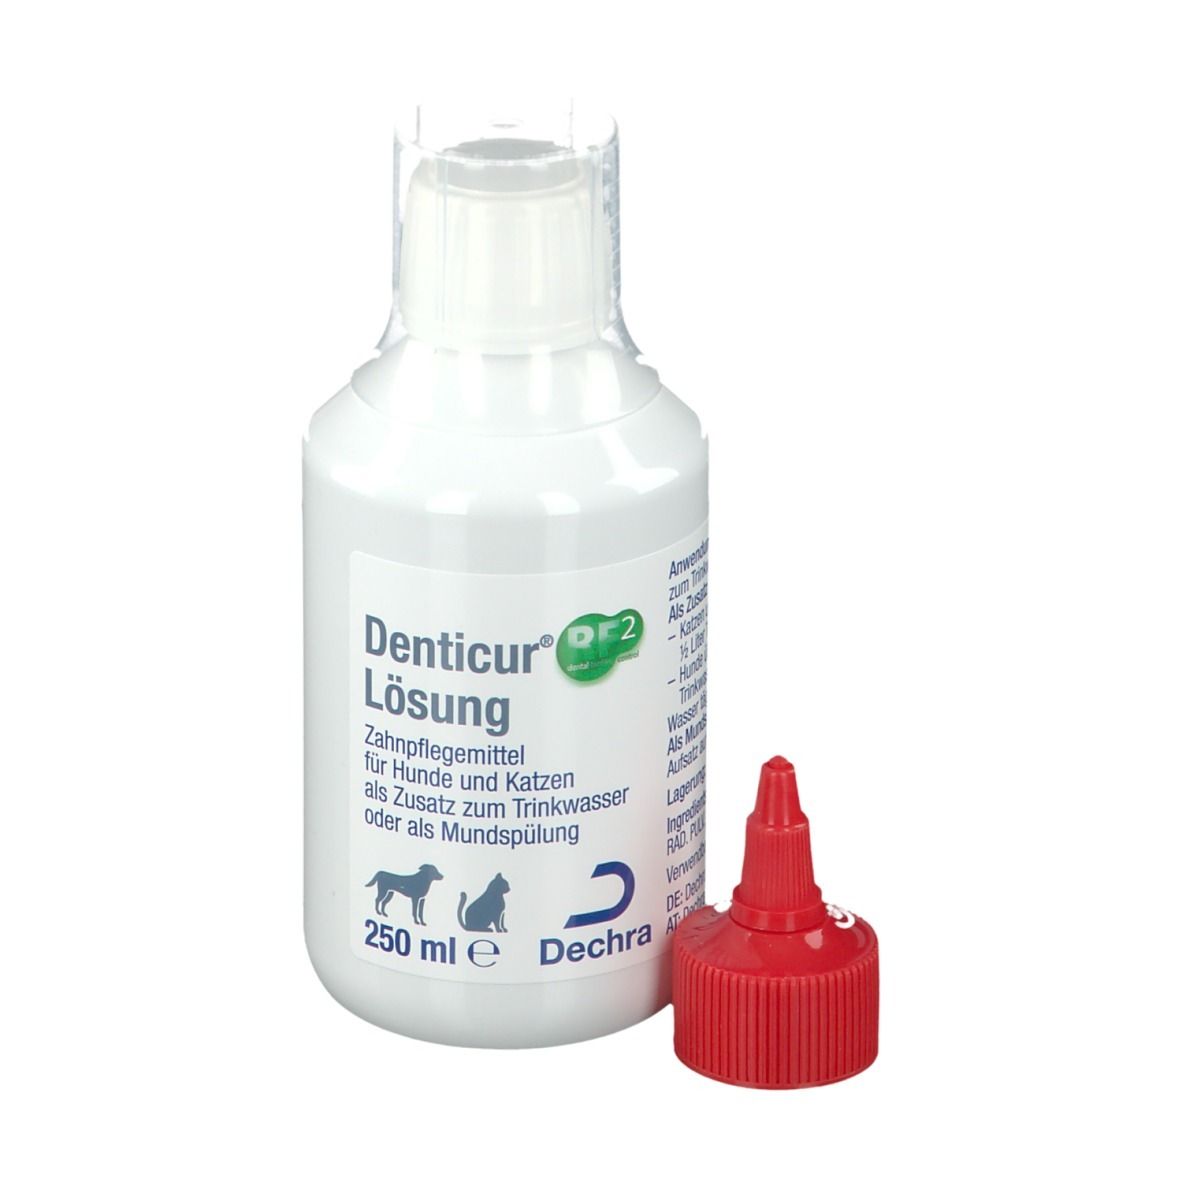 Denticur® RF2 Lösung